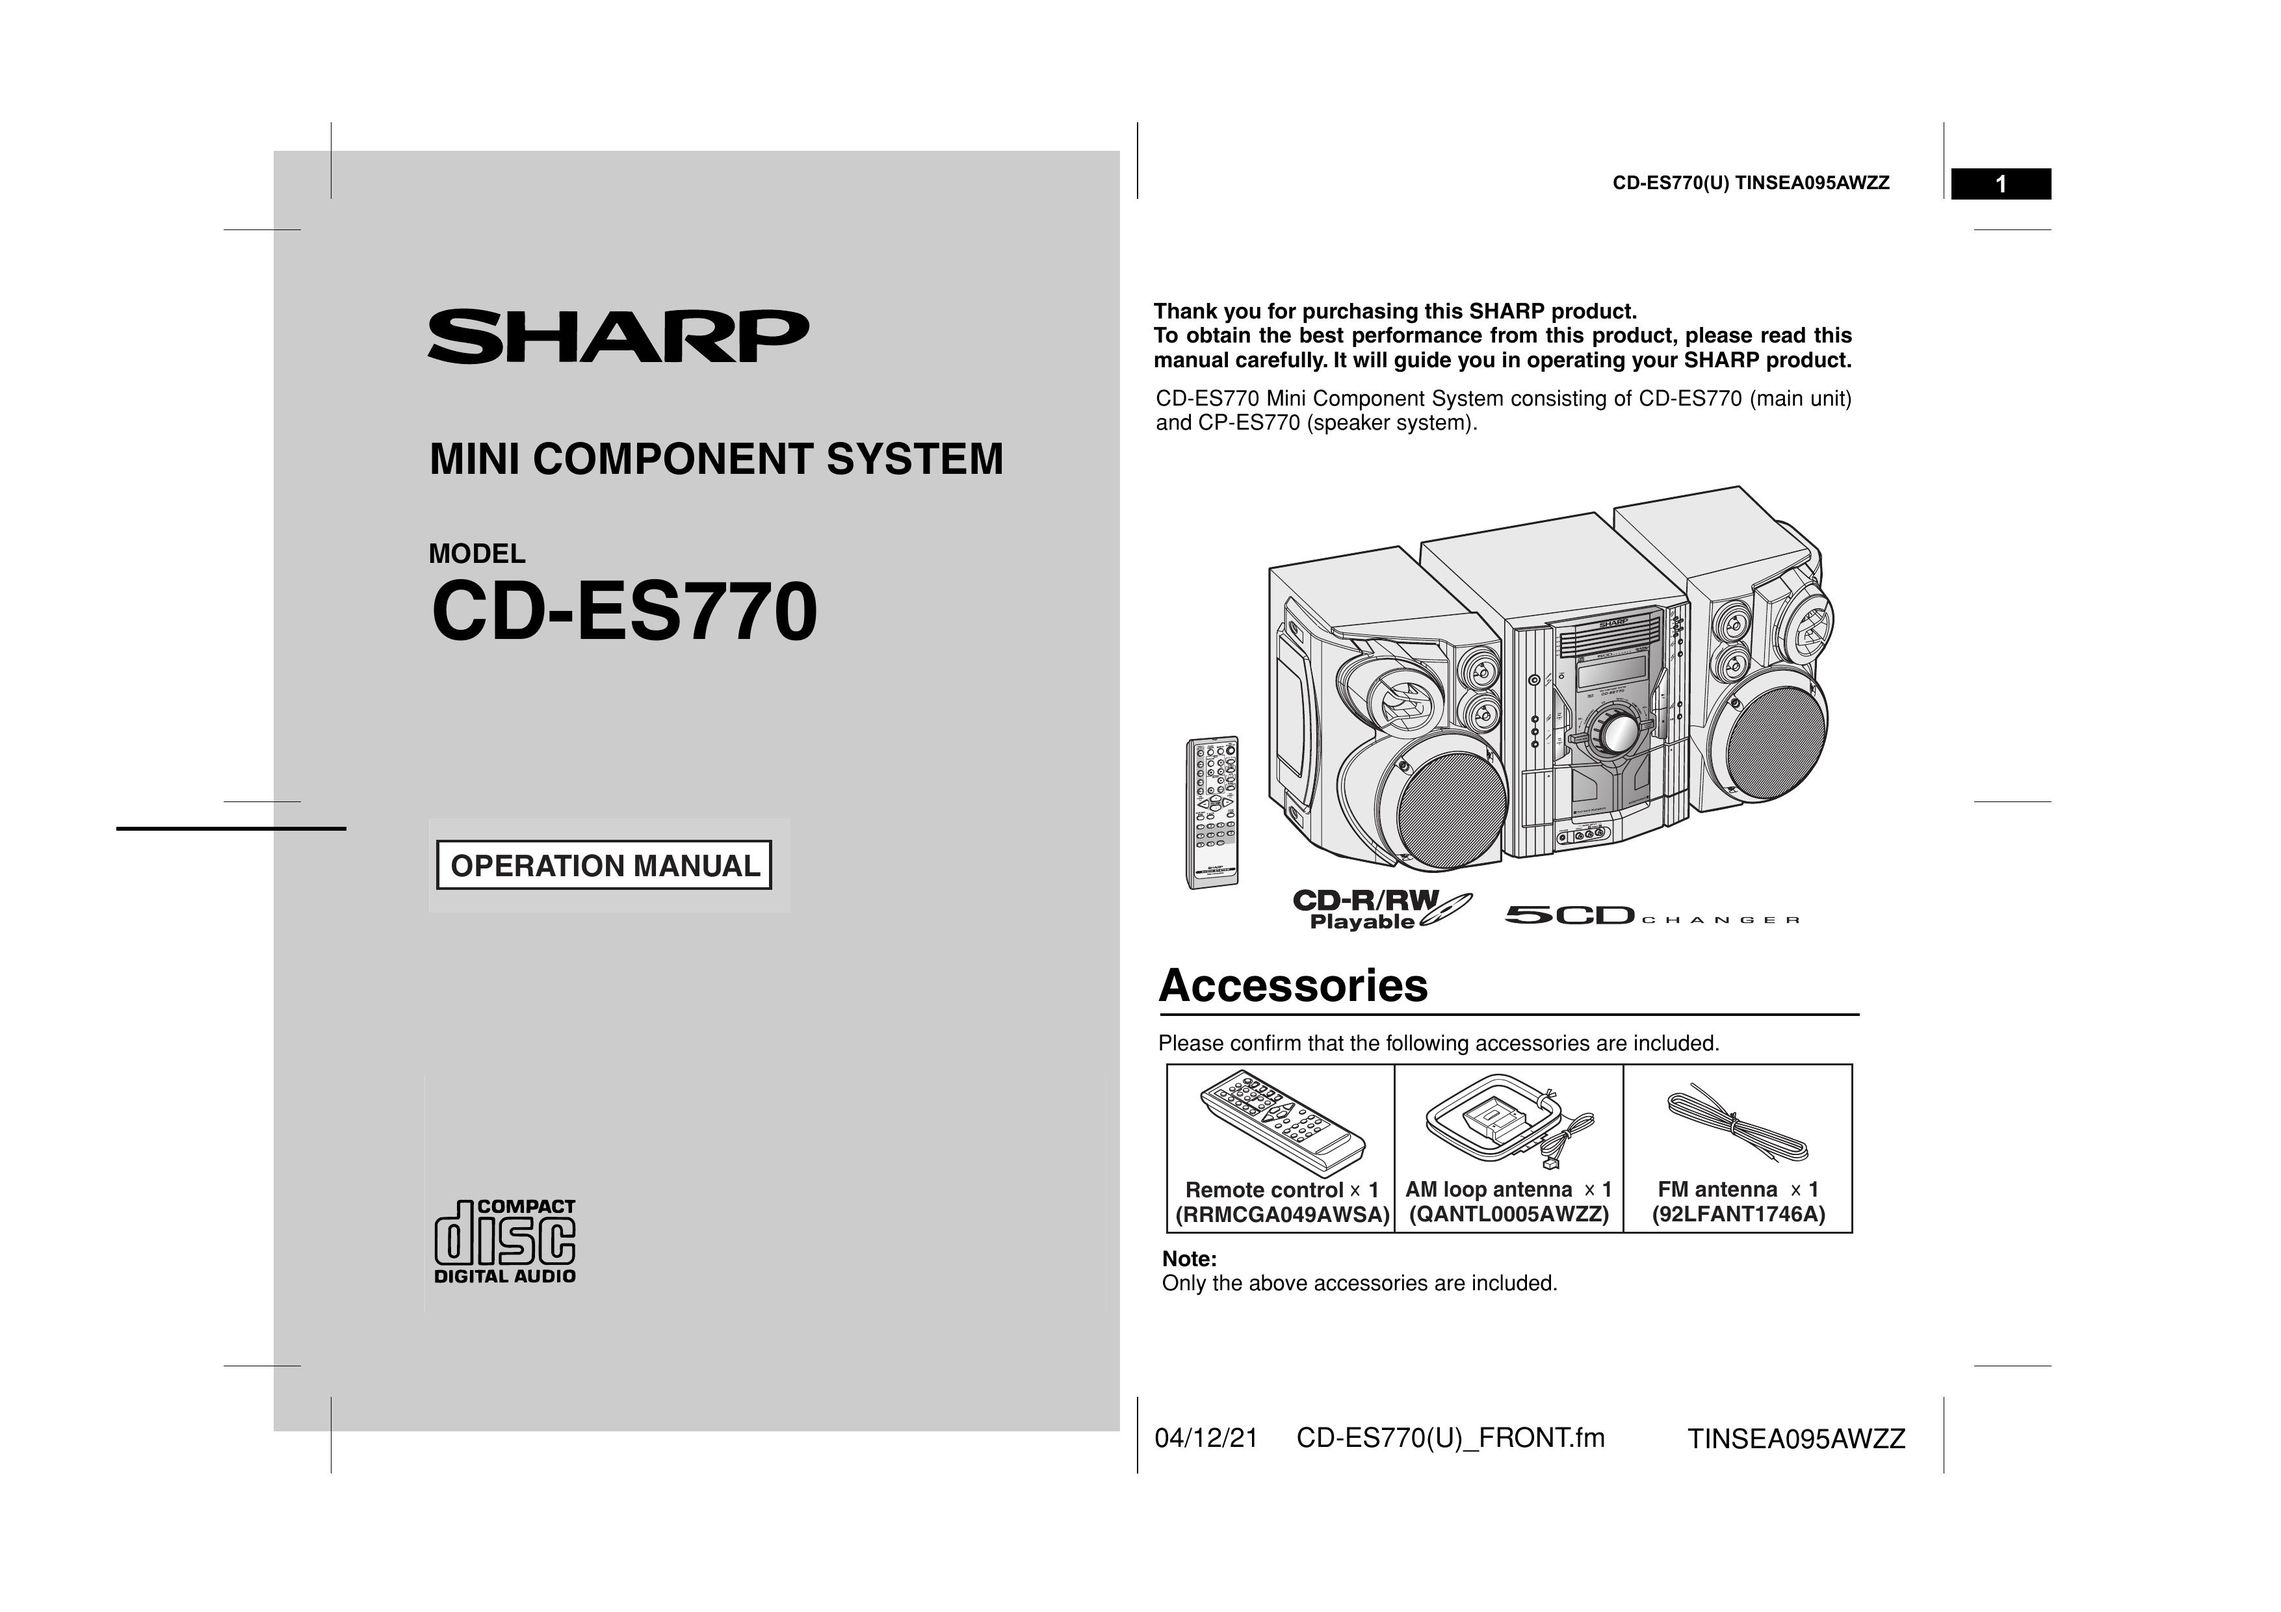 Sharp 92LFANT1746A Microwave Oven User Manual